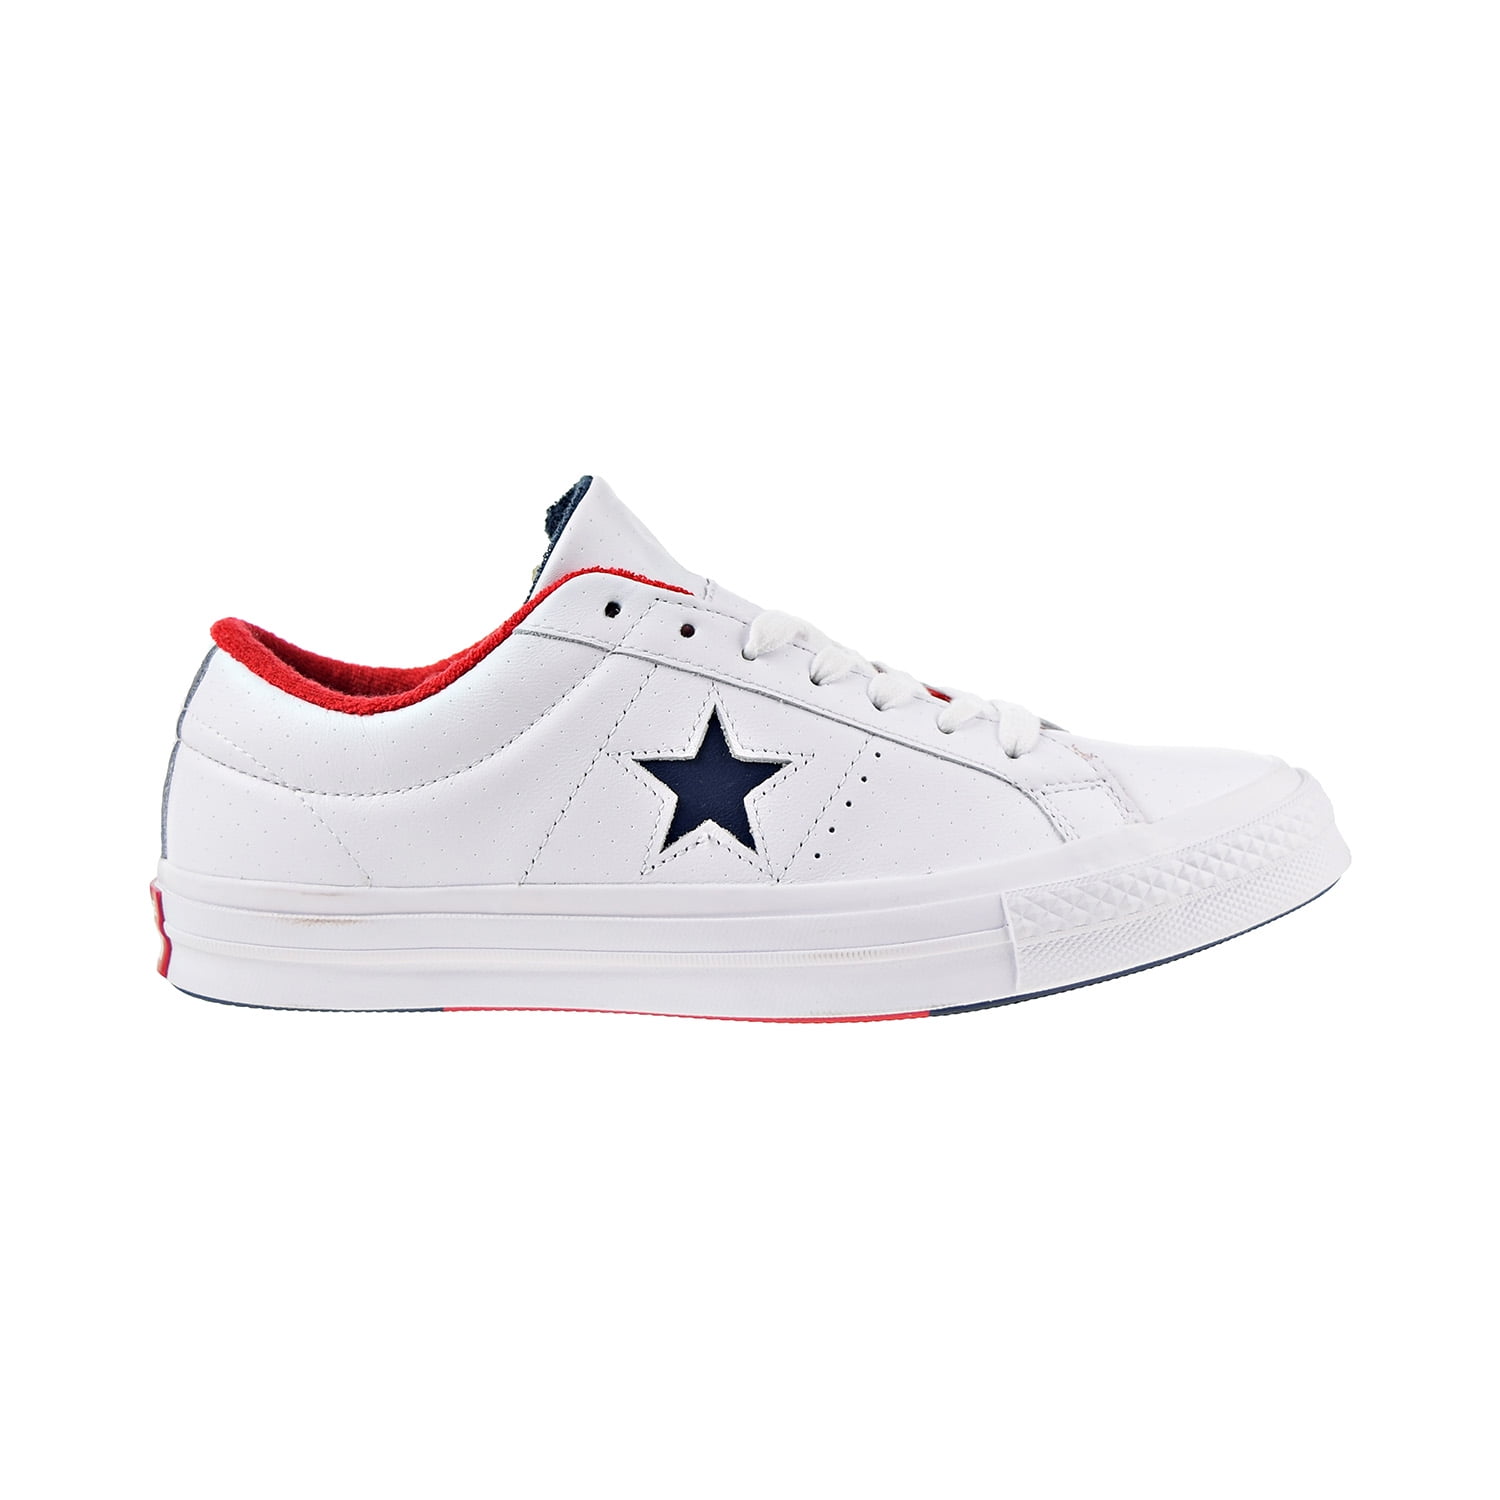 One Star Ox Men's Shoes 160555c - Walmart.com